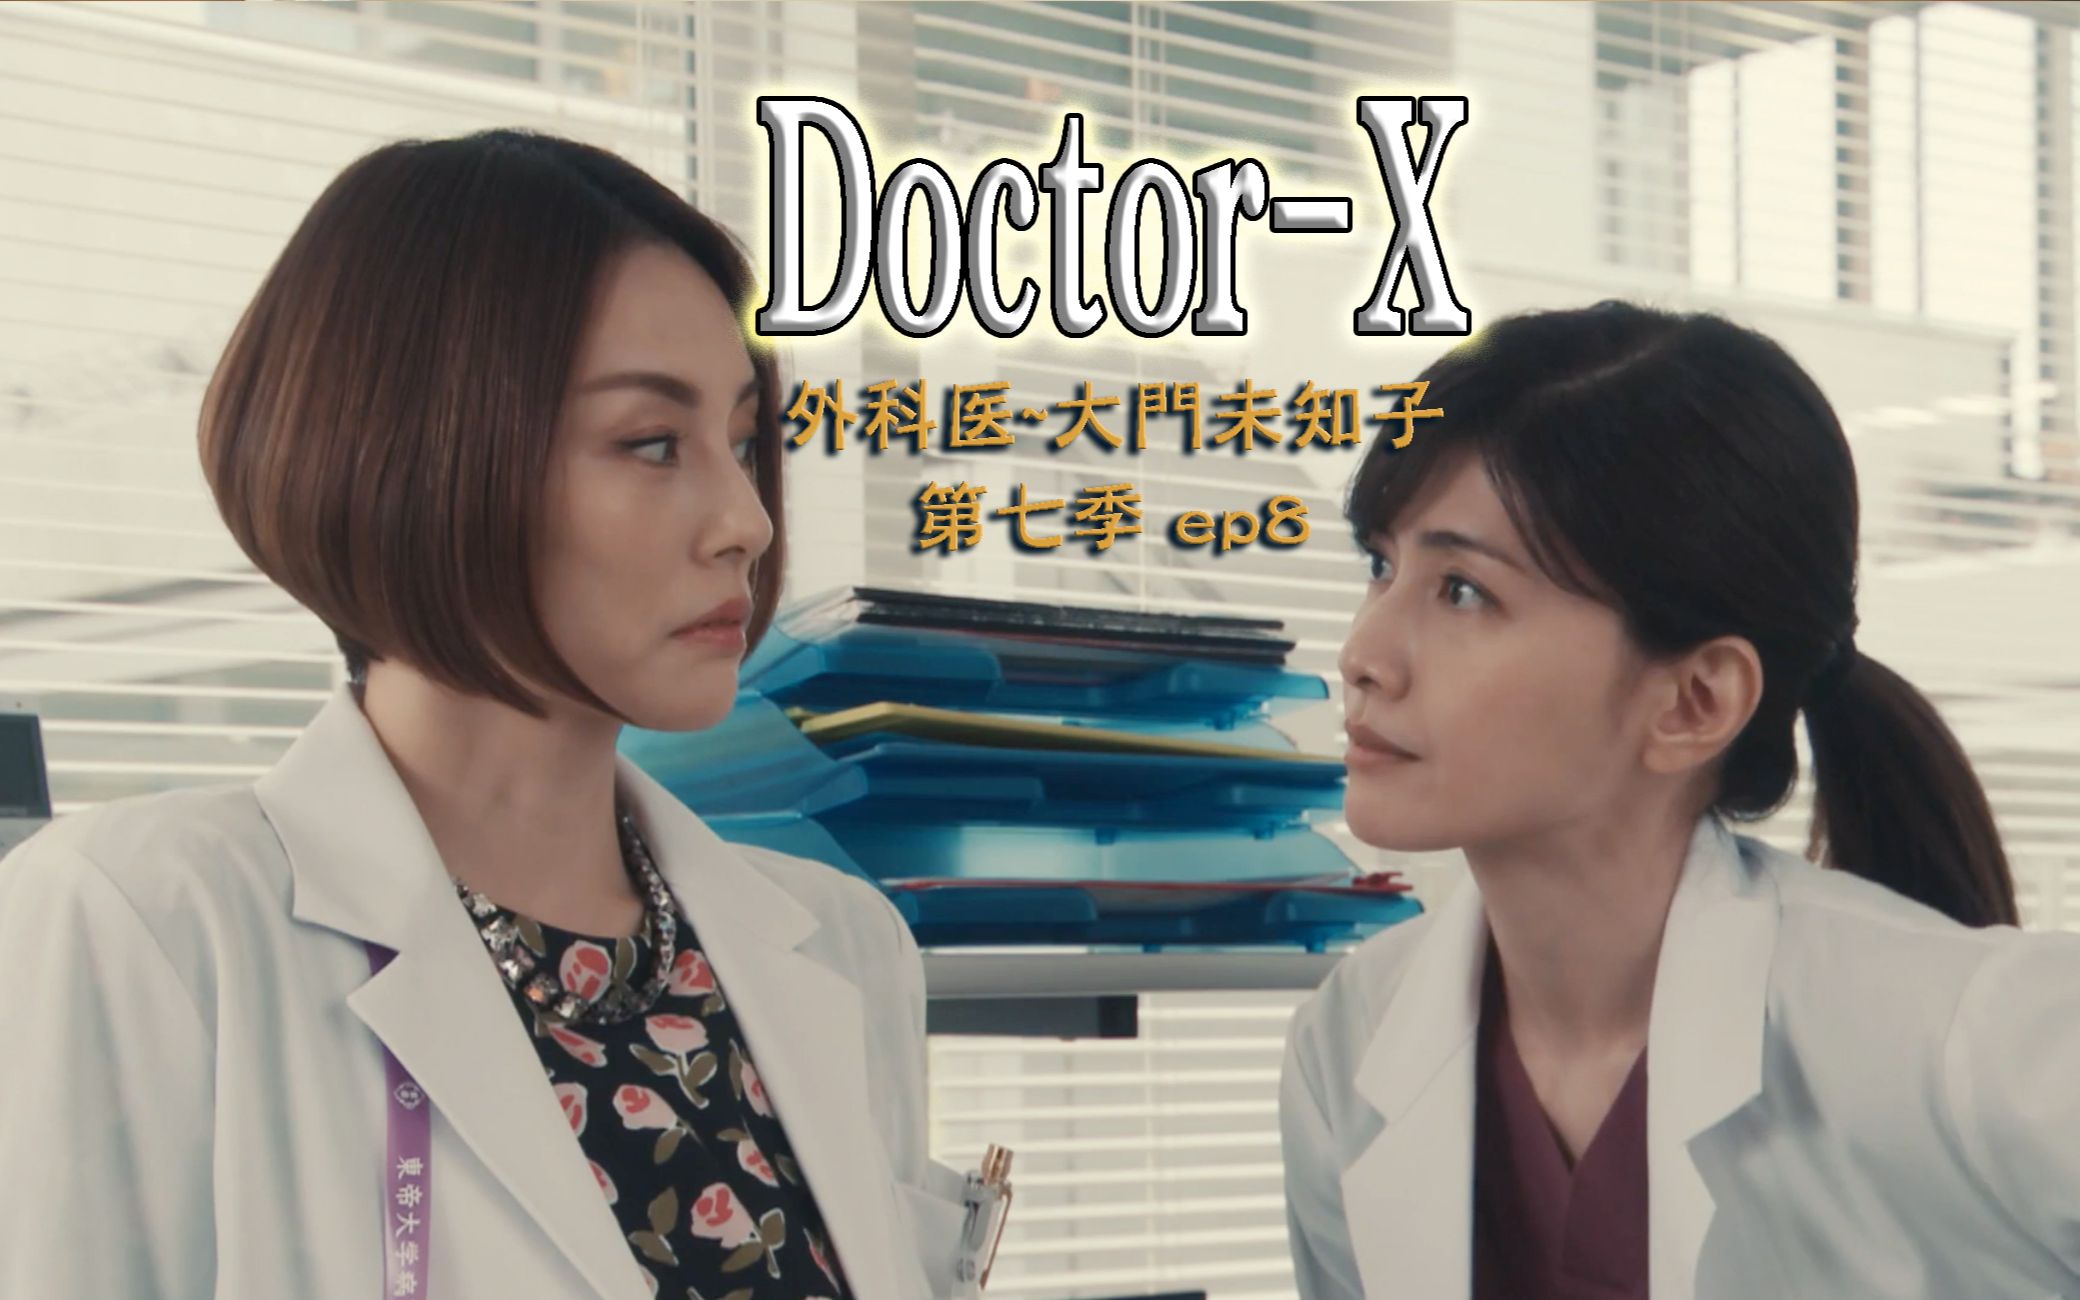 doctorx第7季图片